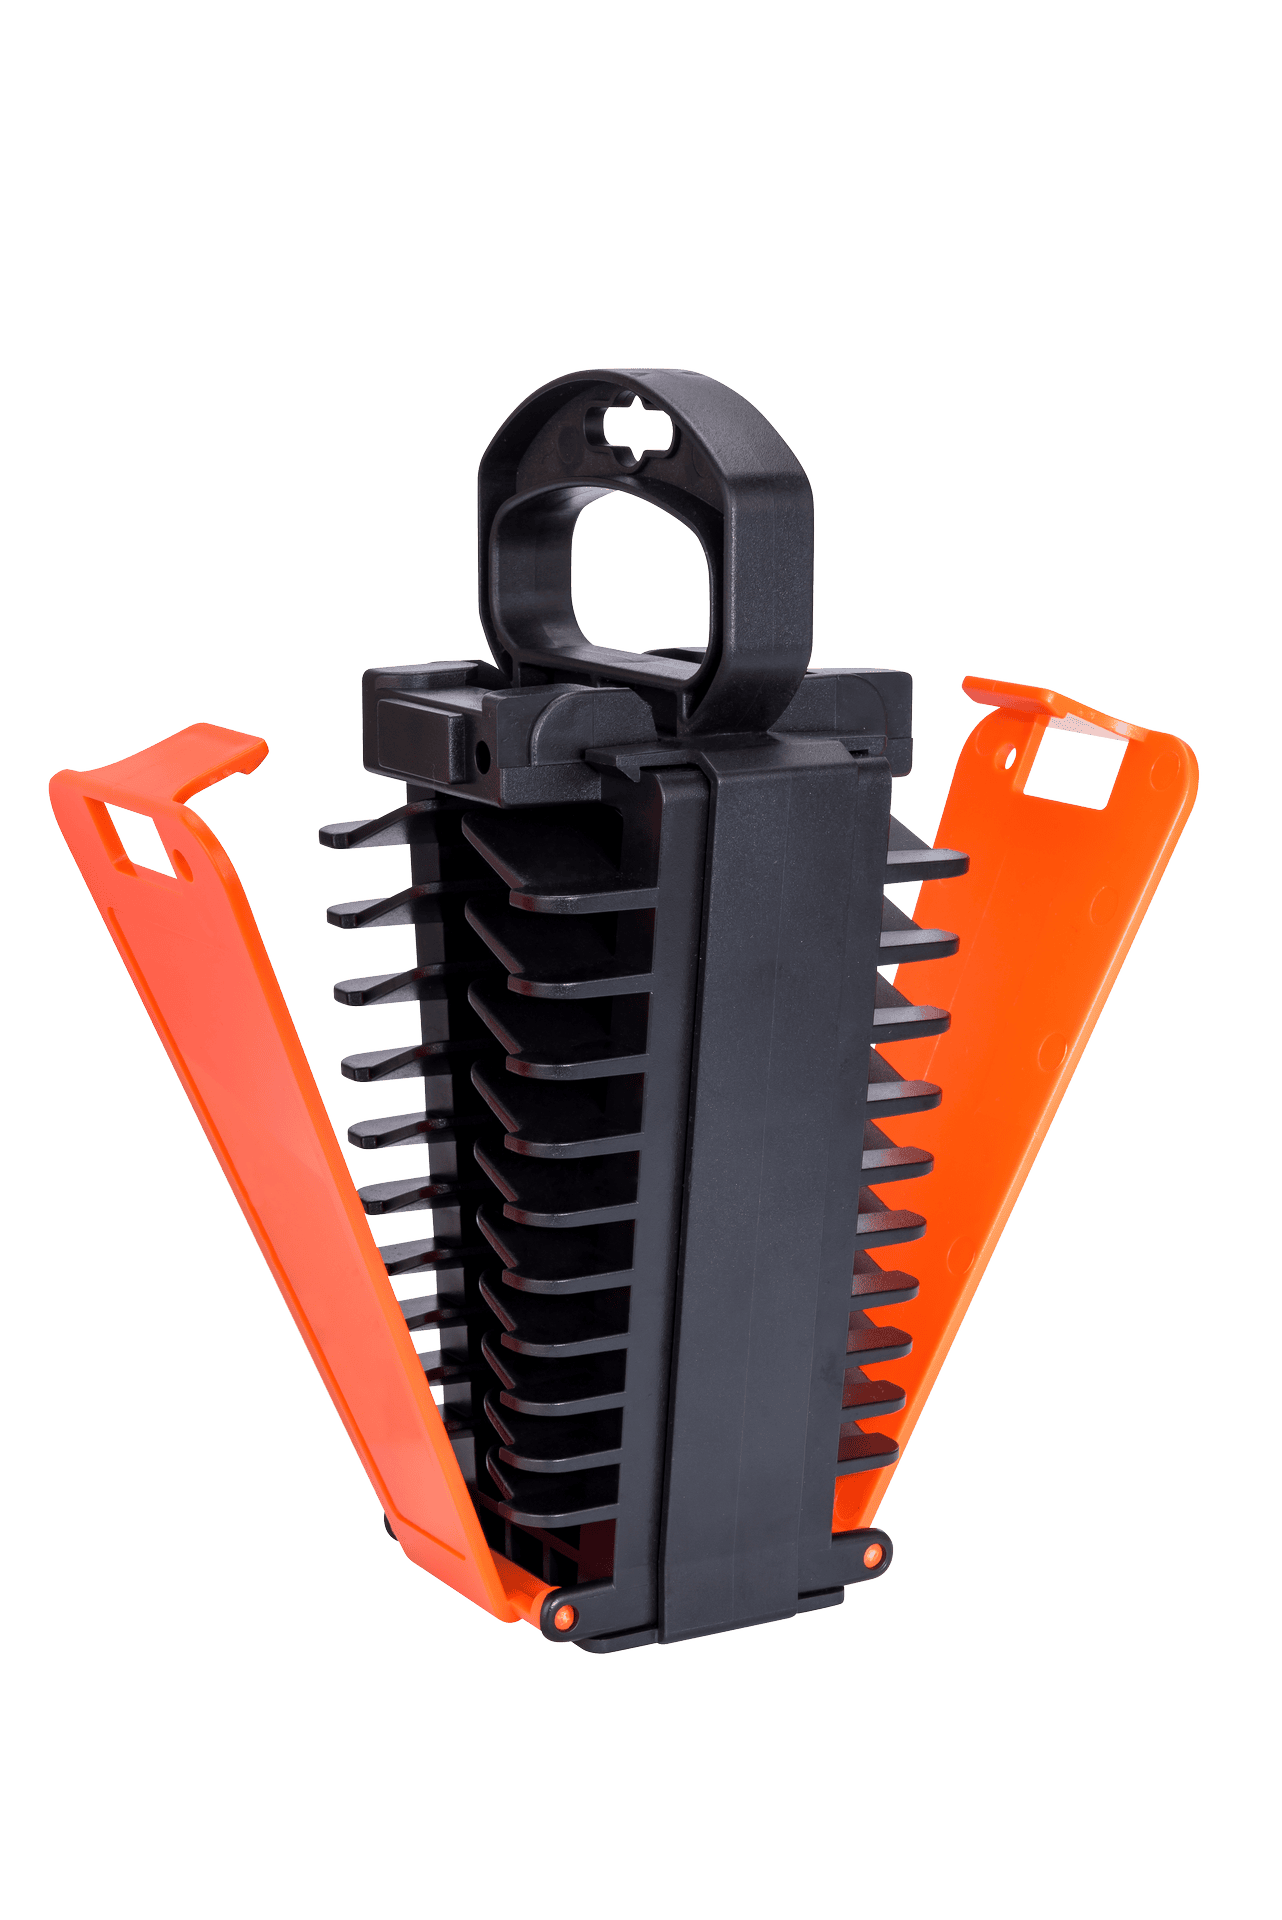 20PCS New Portable Wrench Organizer